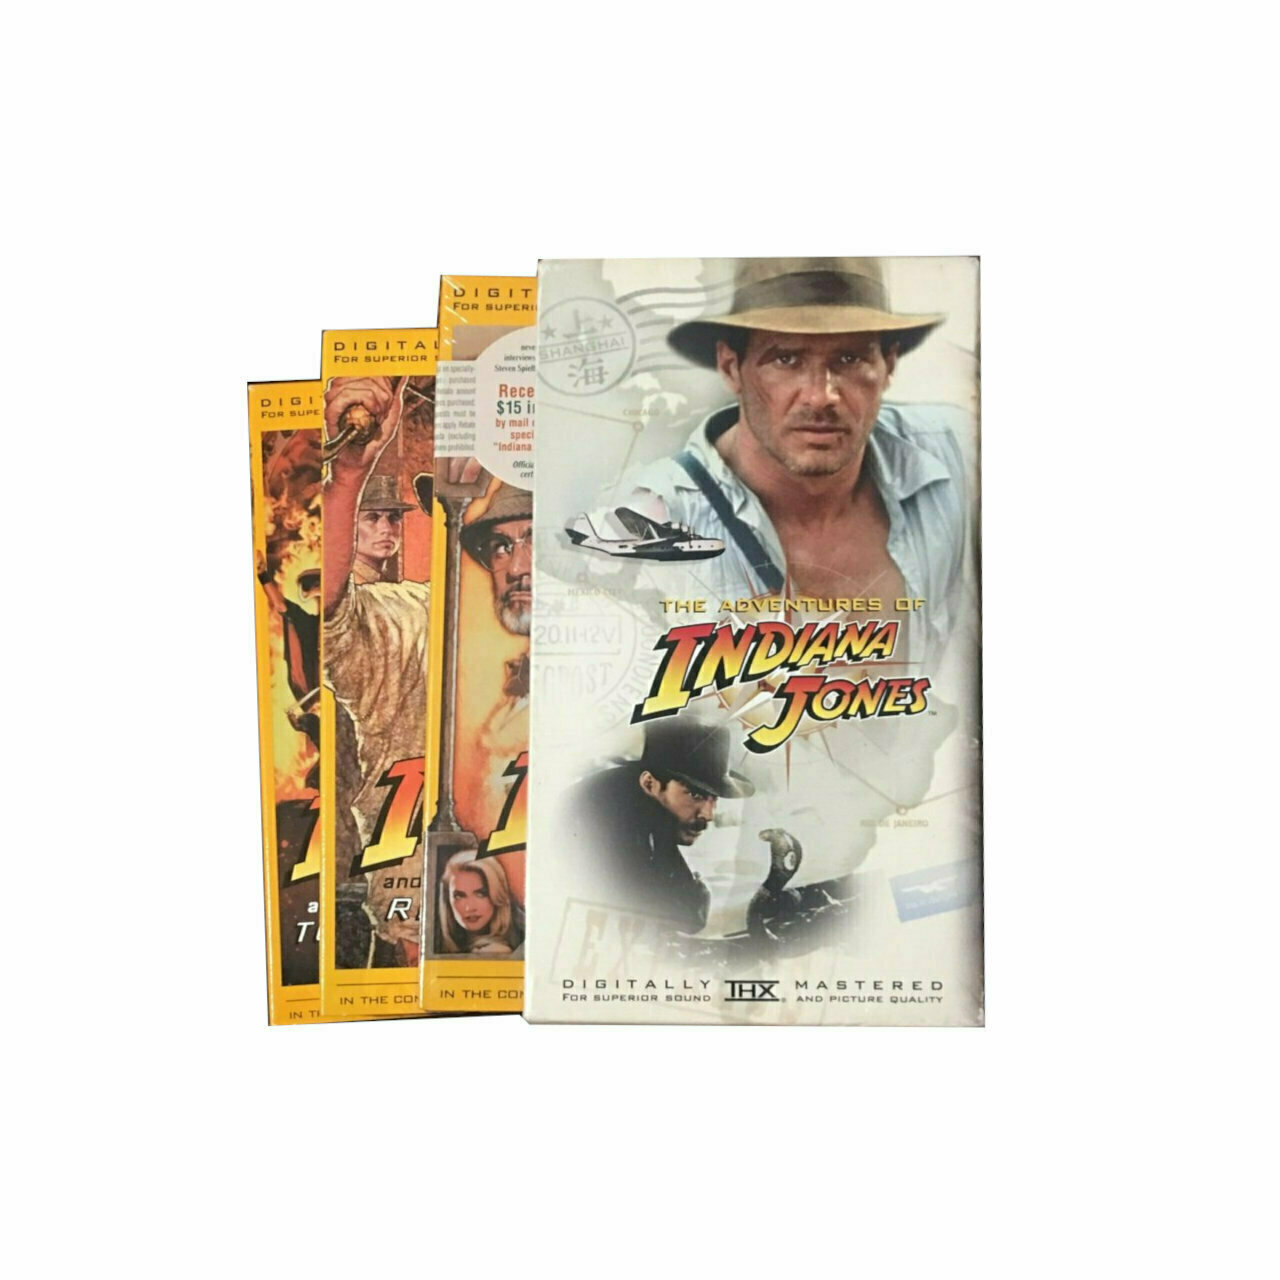 The Adventures of Indiana Jones VHS Box Set